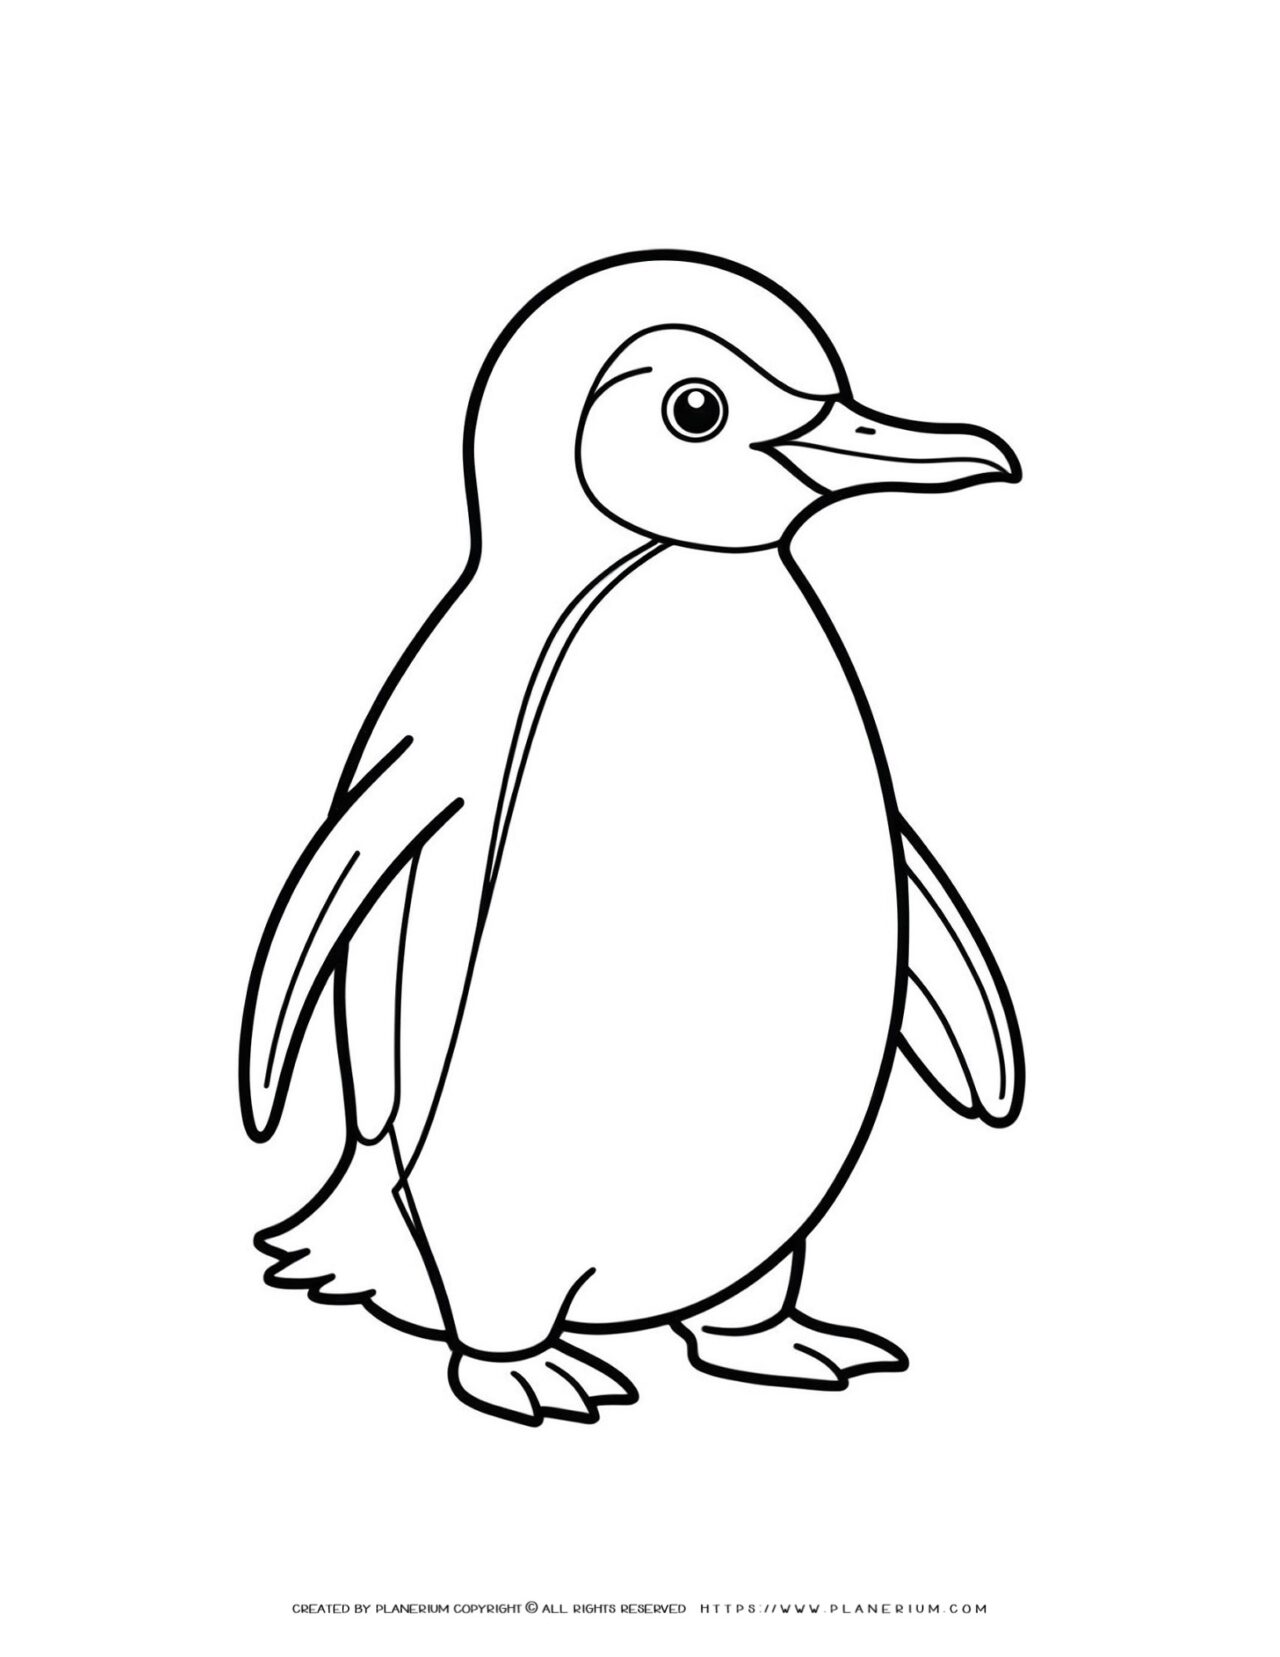 Printable-line-art-of-a-cartoon-penguin